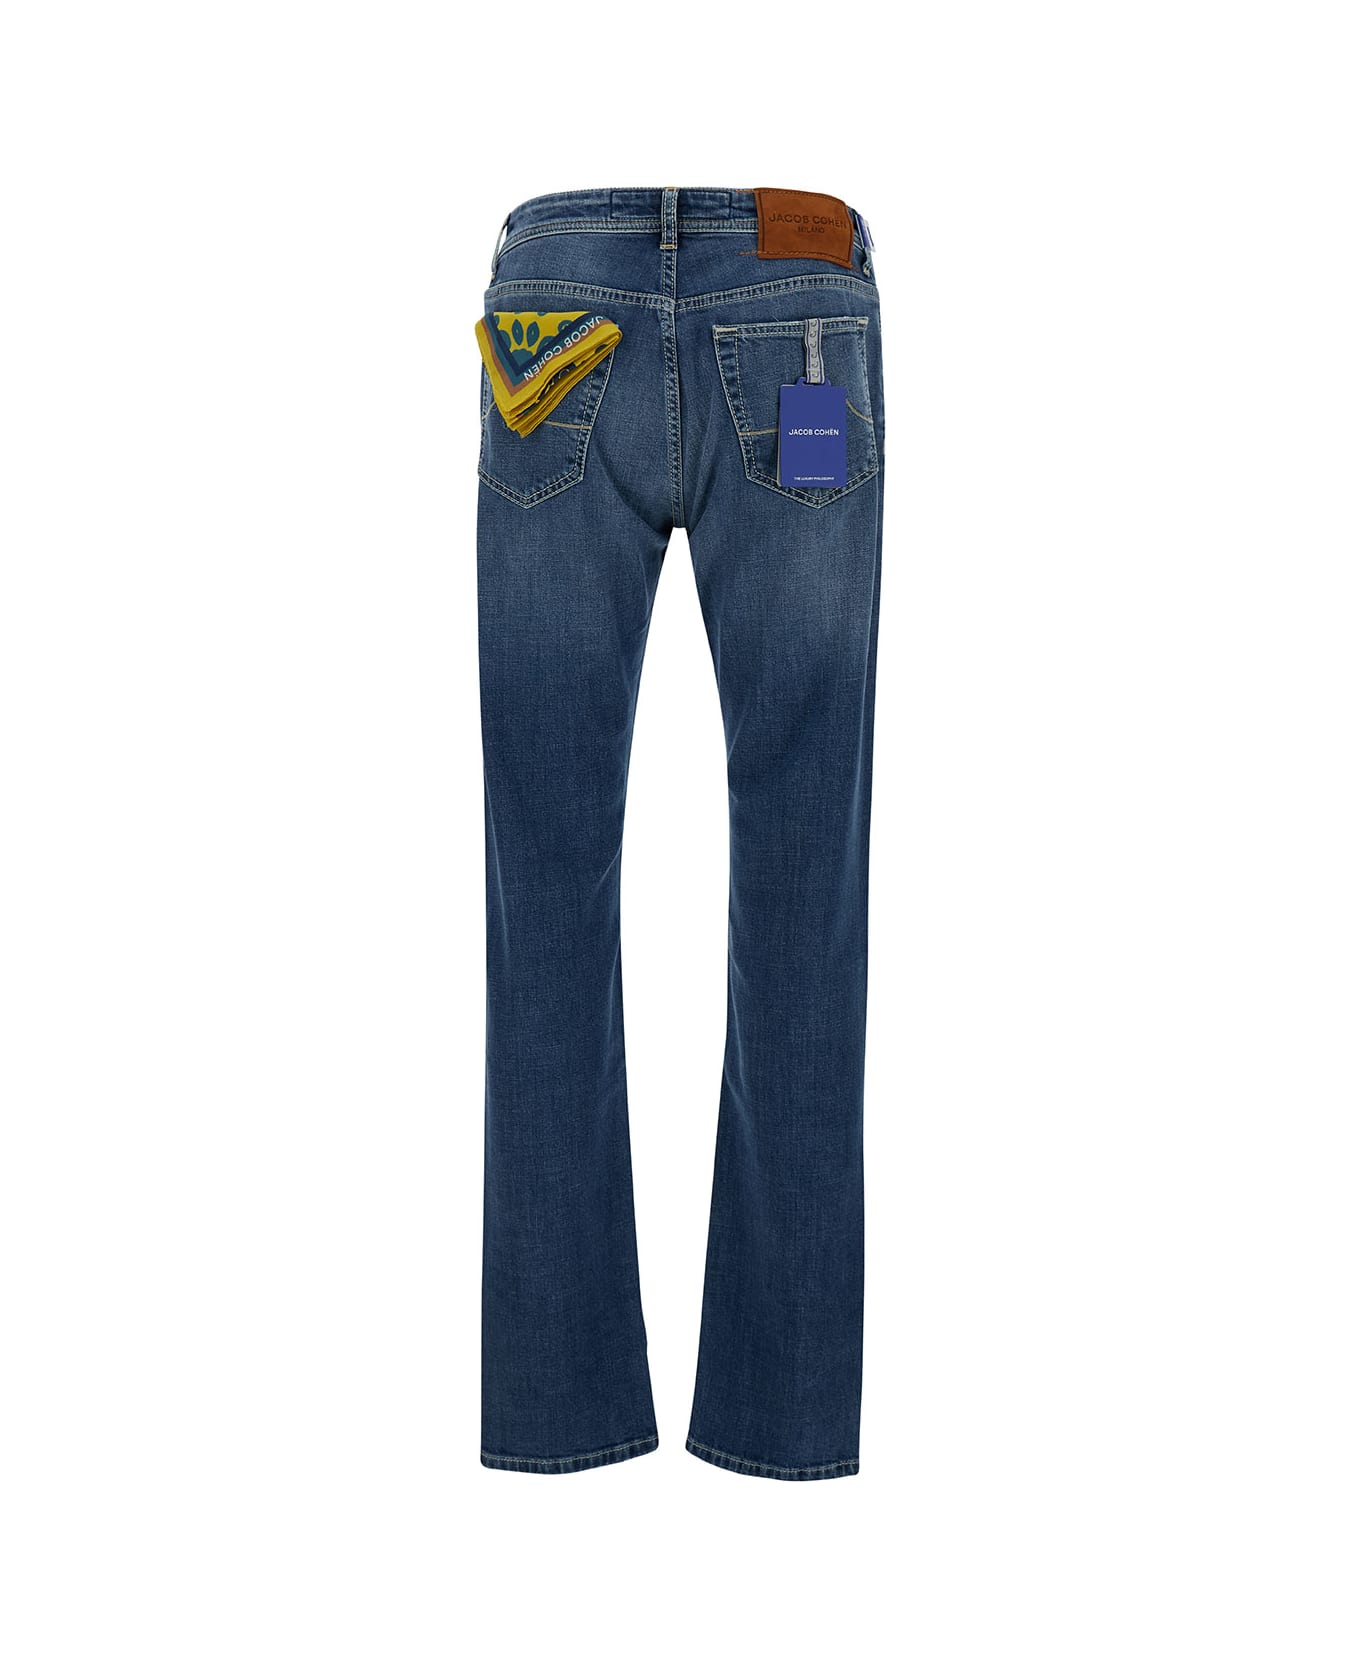 Jacob Cohen Blue Slim Five-pocket Jeans In Cotton Denim Man - Blu